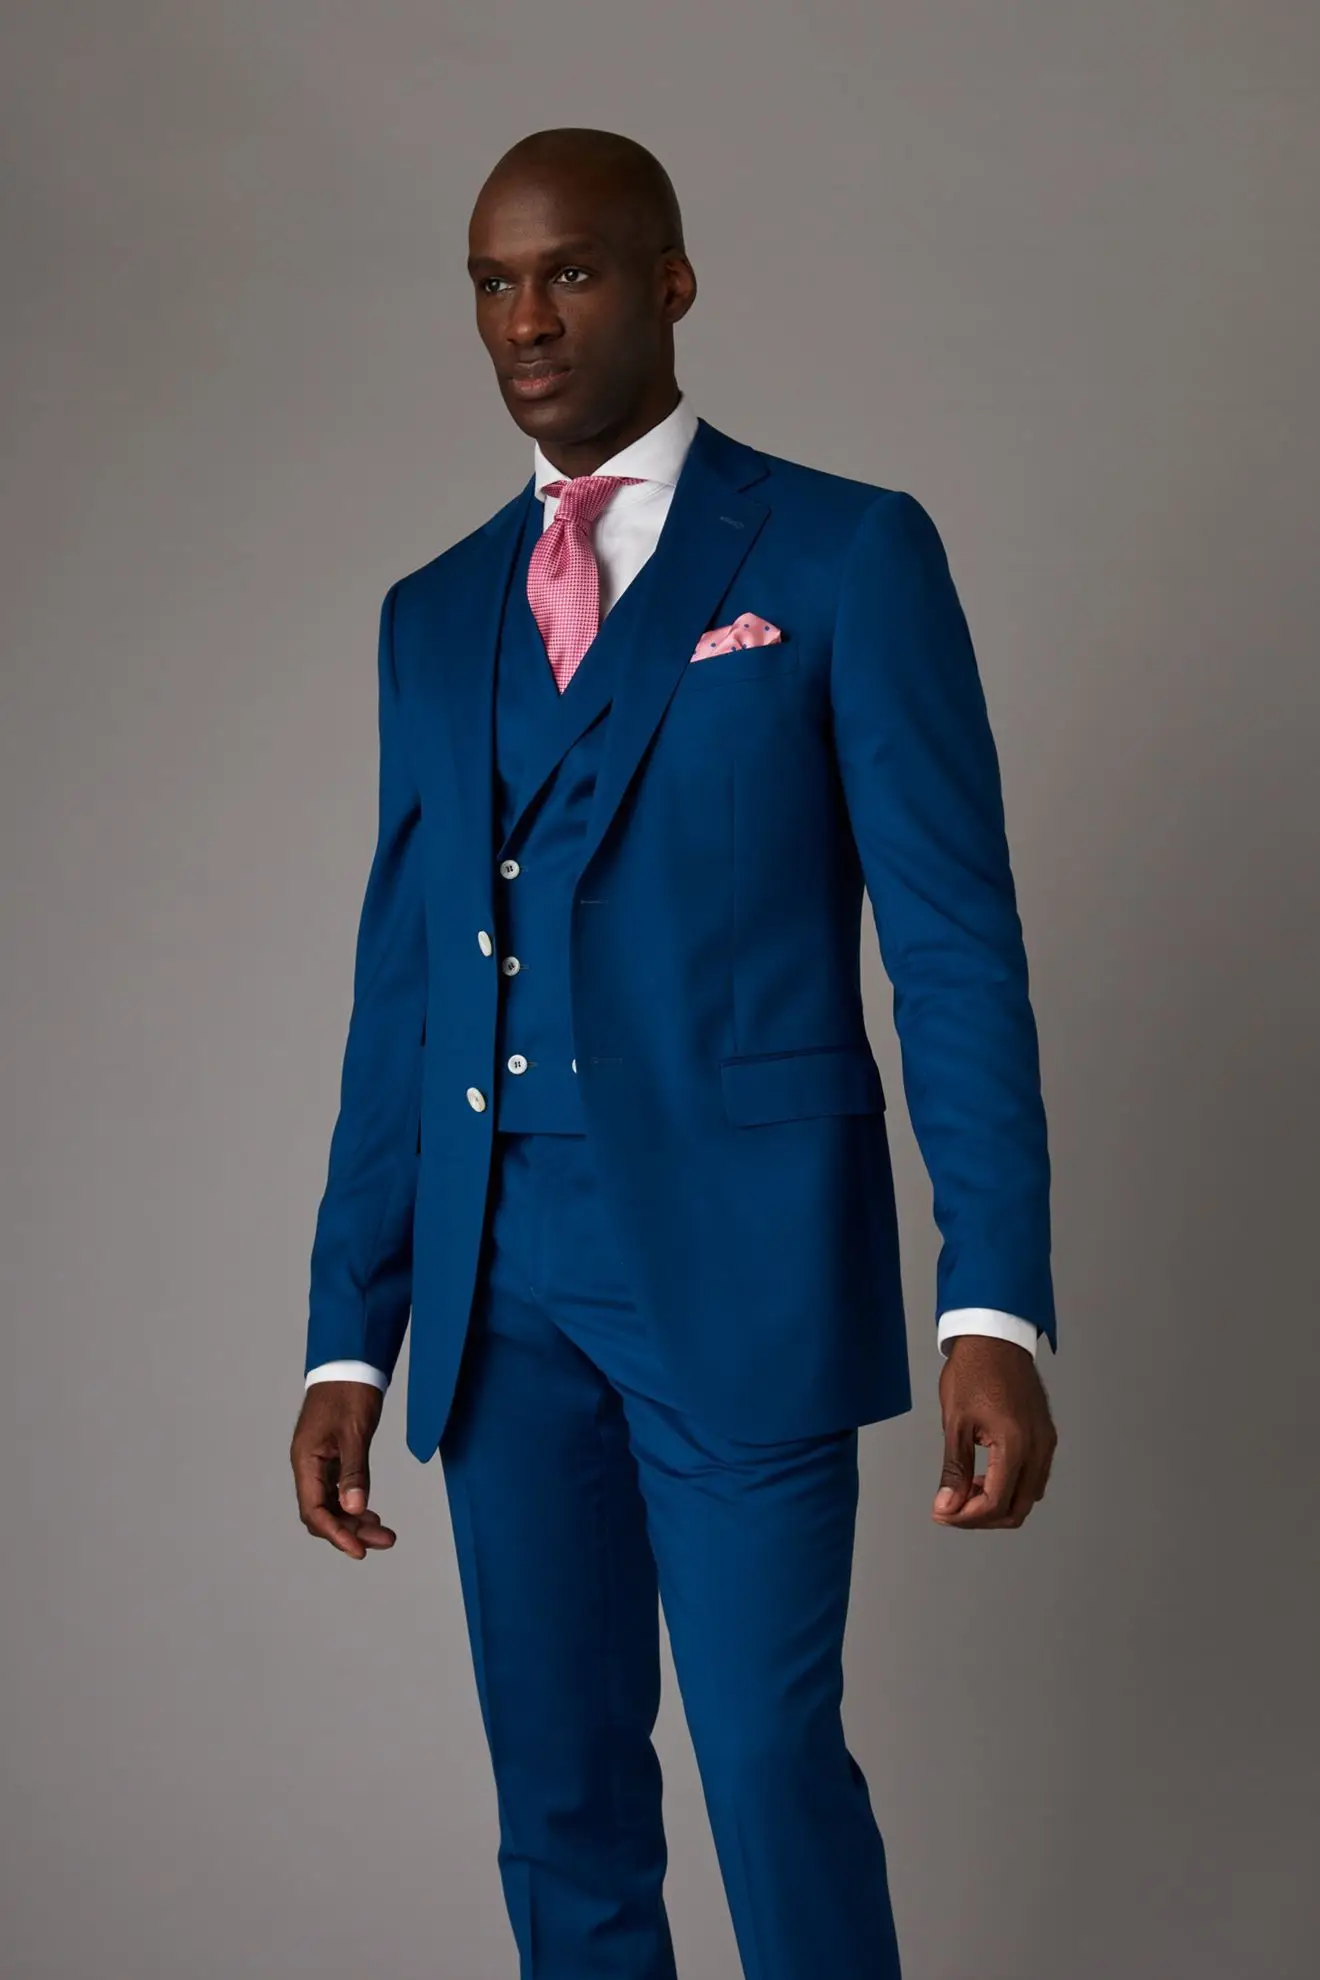 Germanicos Sydney - Bespoke Tailor Made Suits & Wedding Tailor Sydney